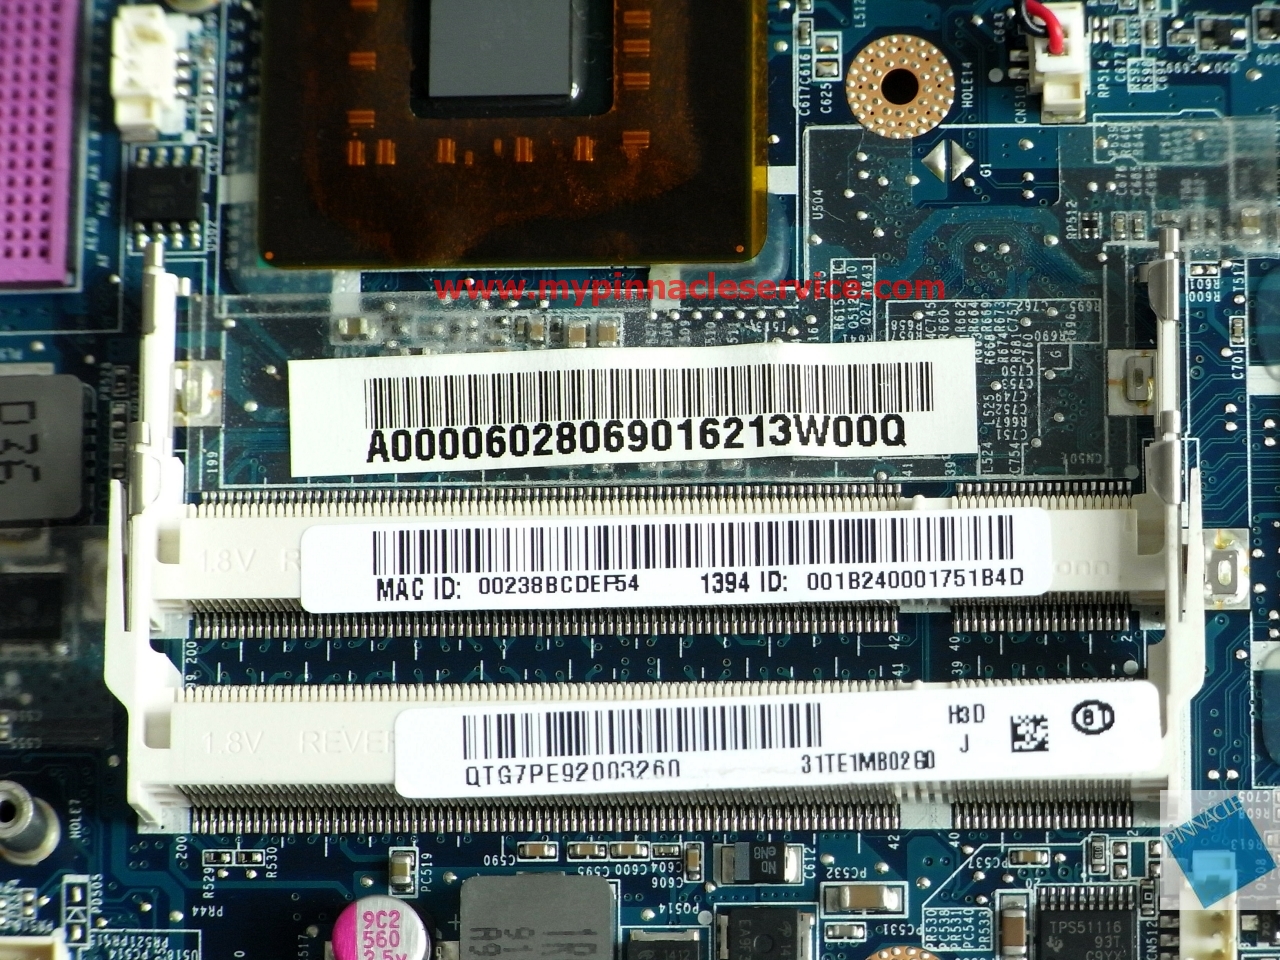 a000060280-motherboard-for-toshiba-satellite-m300-u400-protege-m800-31te1mb0260-rimg0171.jpg